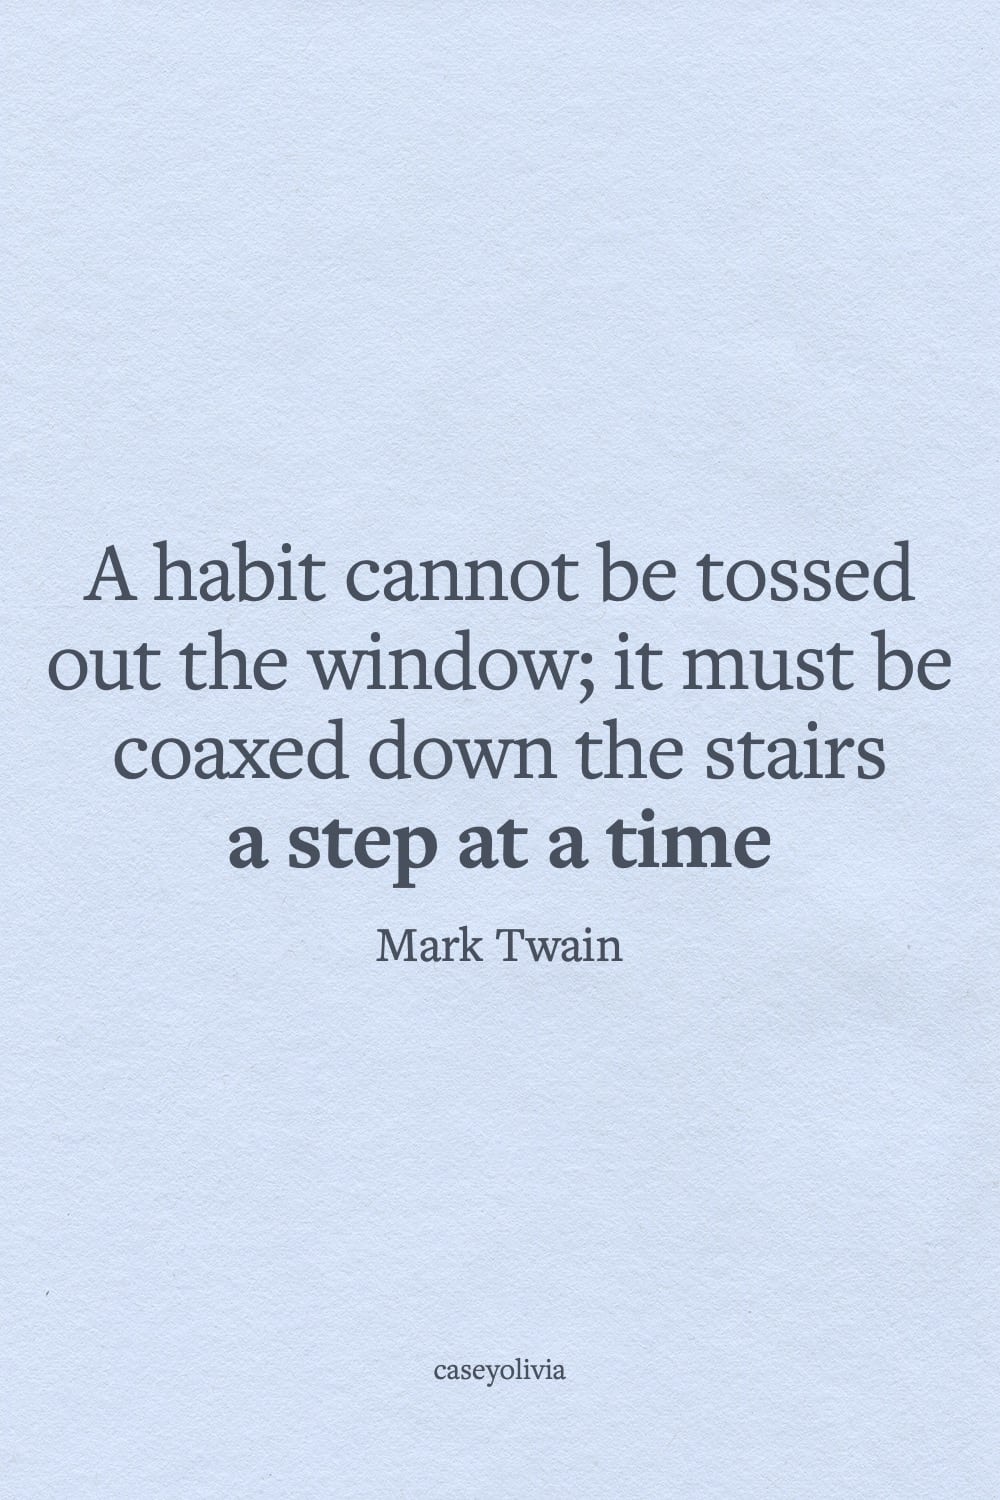 motivational mark twain quotation about habits